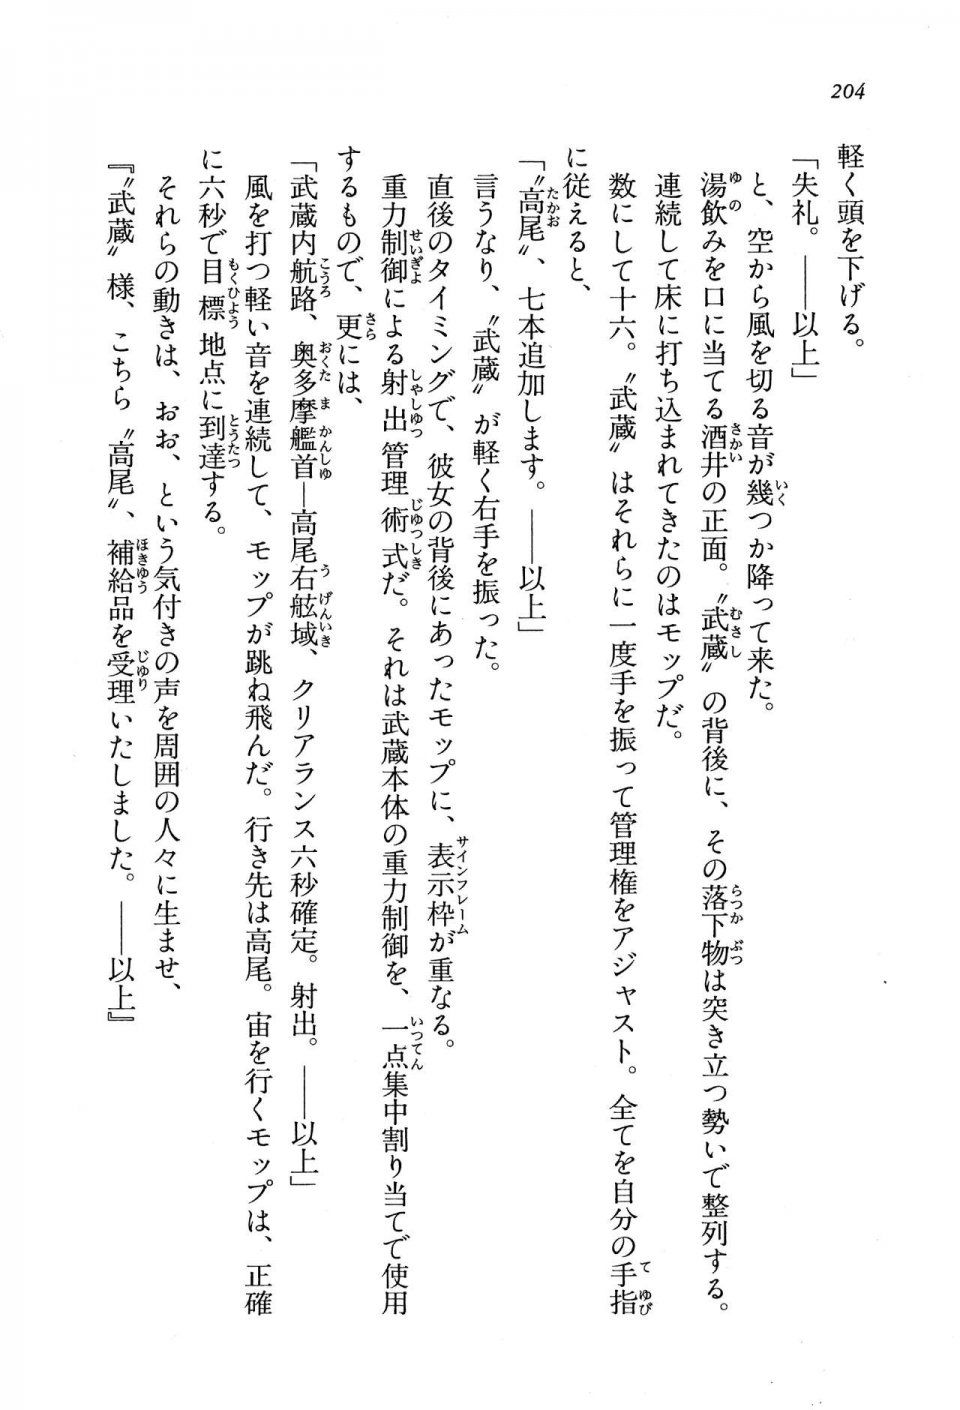 Kyoukai Senjou no Horizon BD Special Mininovel Vol 8(4B) - Photo #208